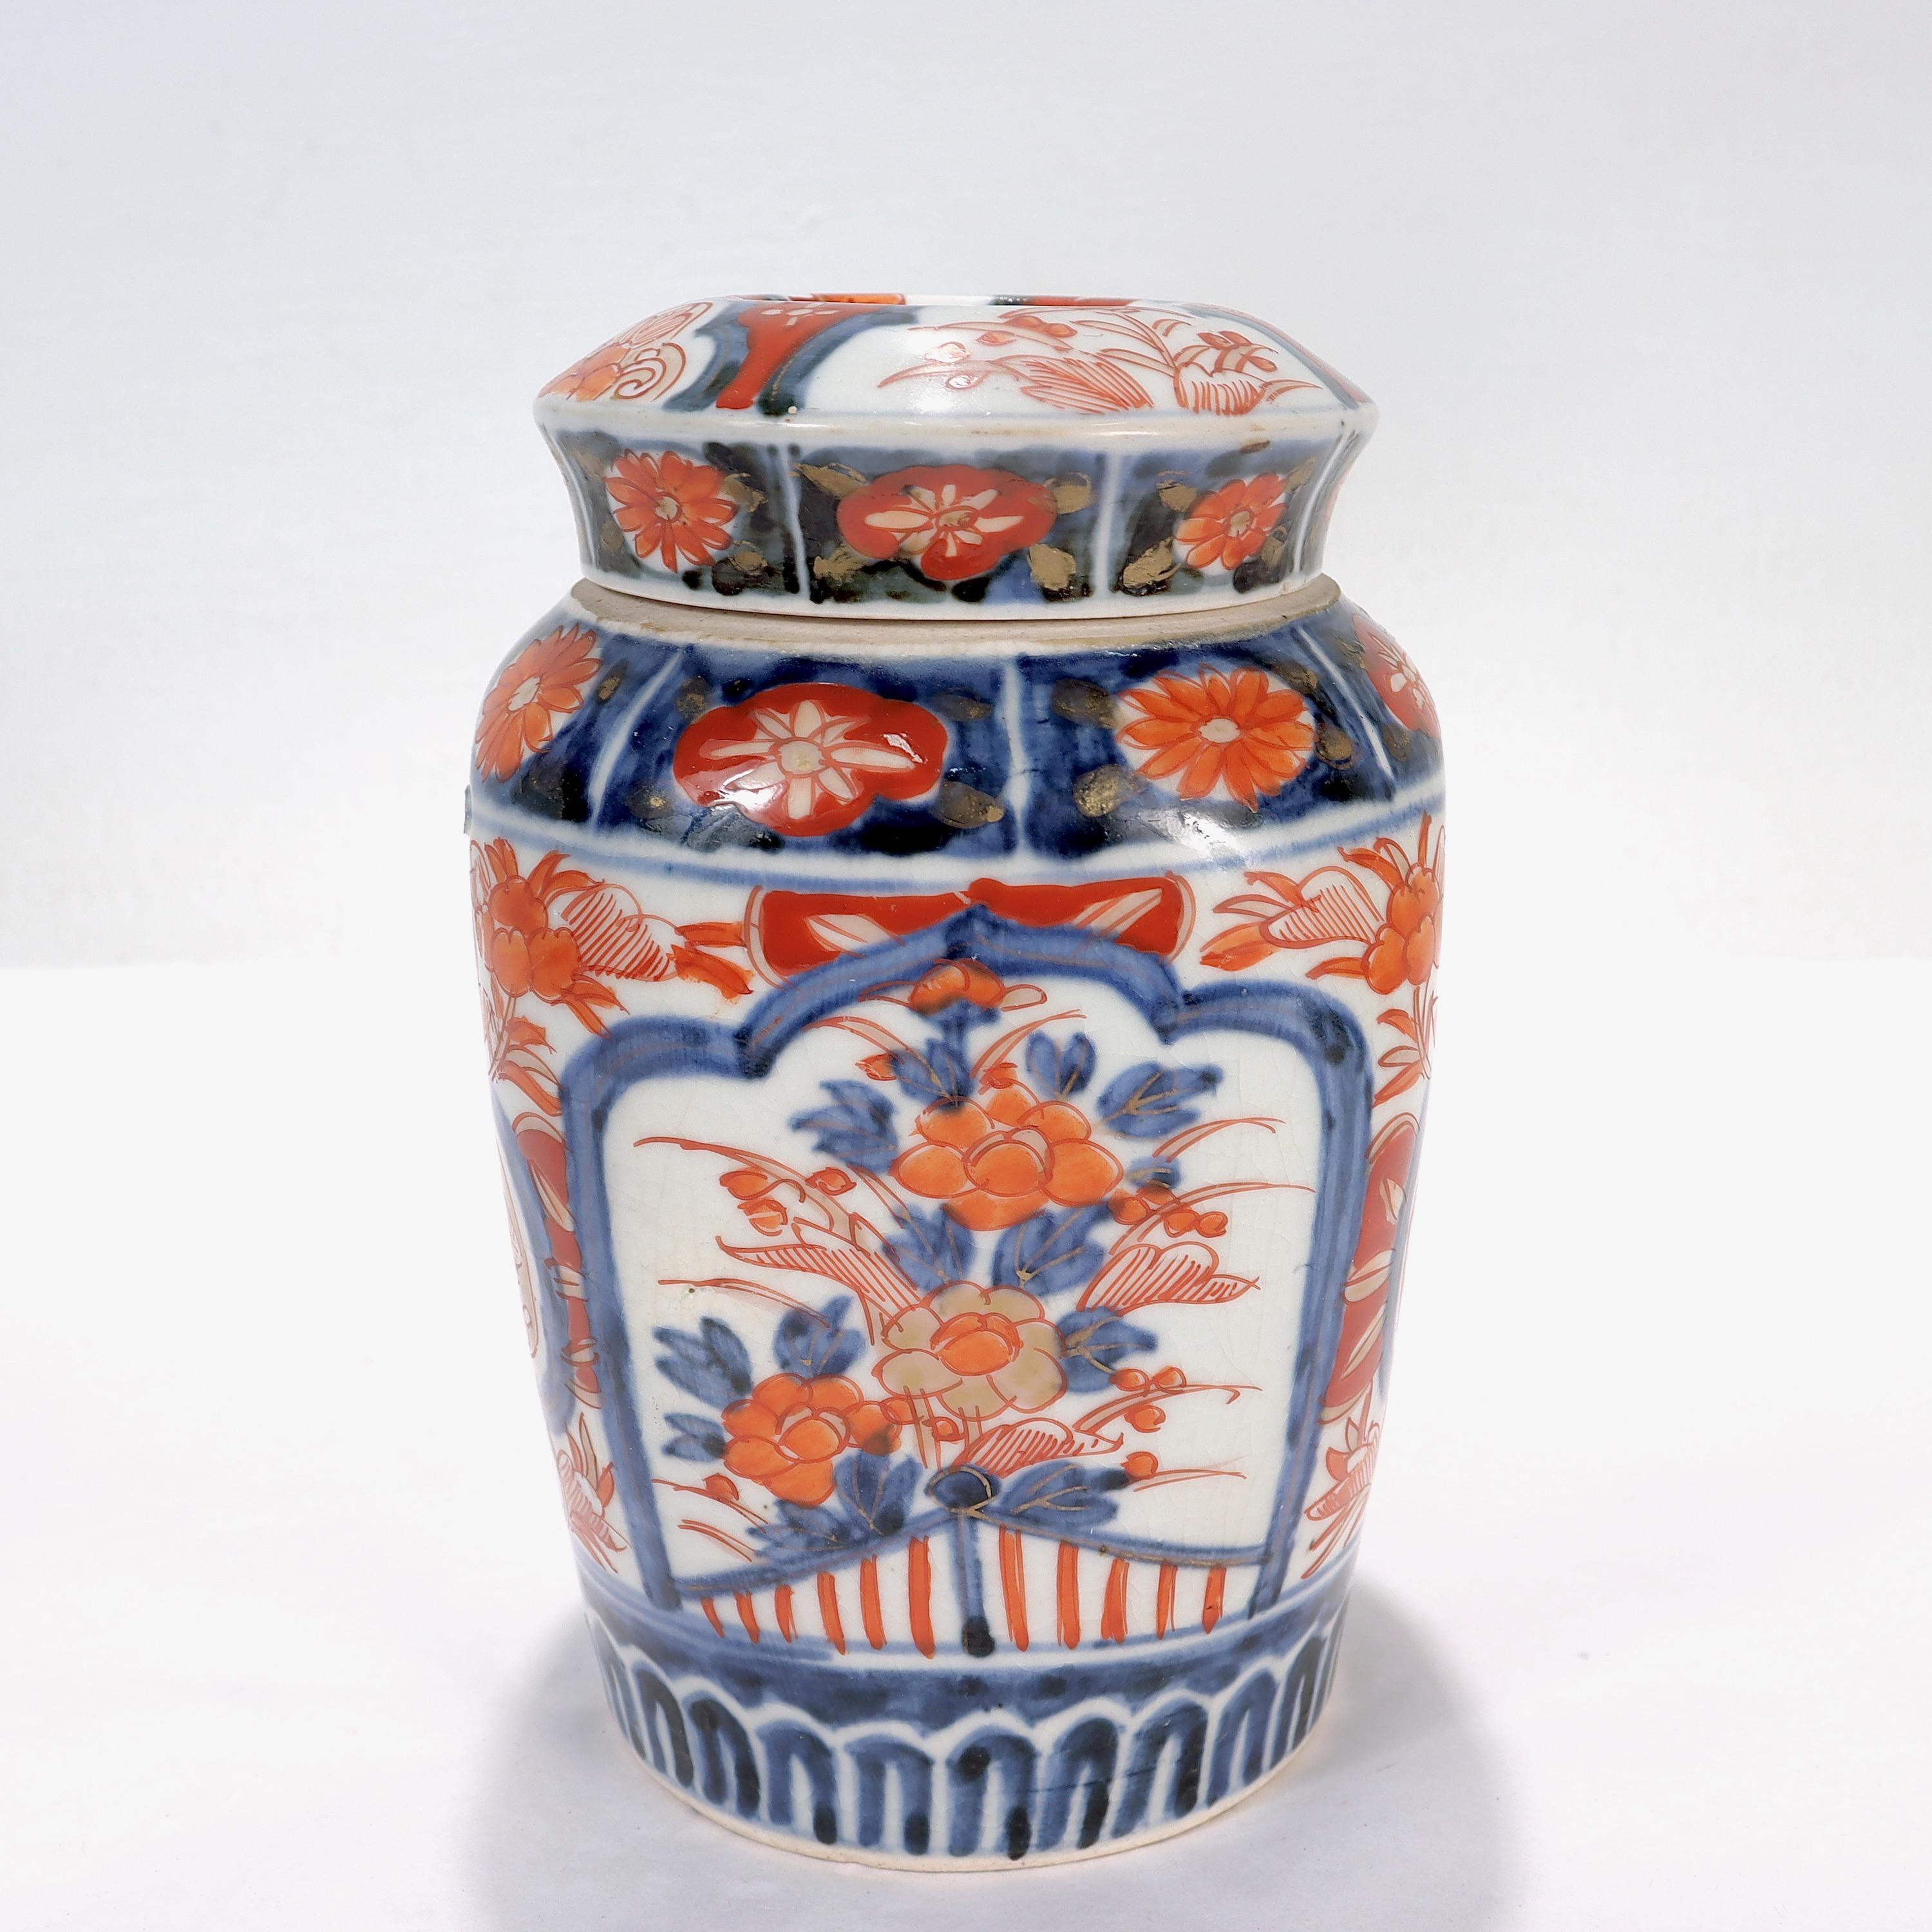 20th Century Old or Antique Japanese Imari Porcelain Covered Jar or Urn For Sale